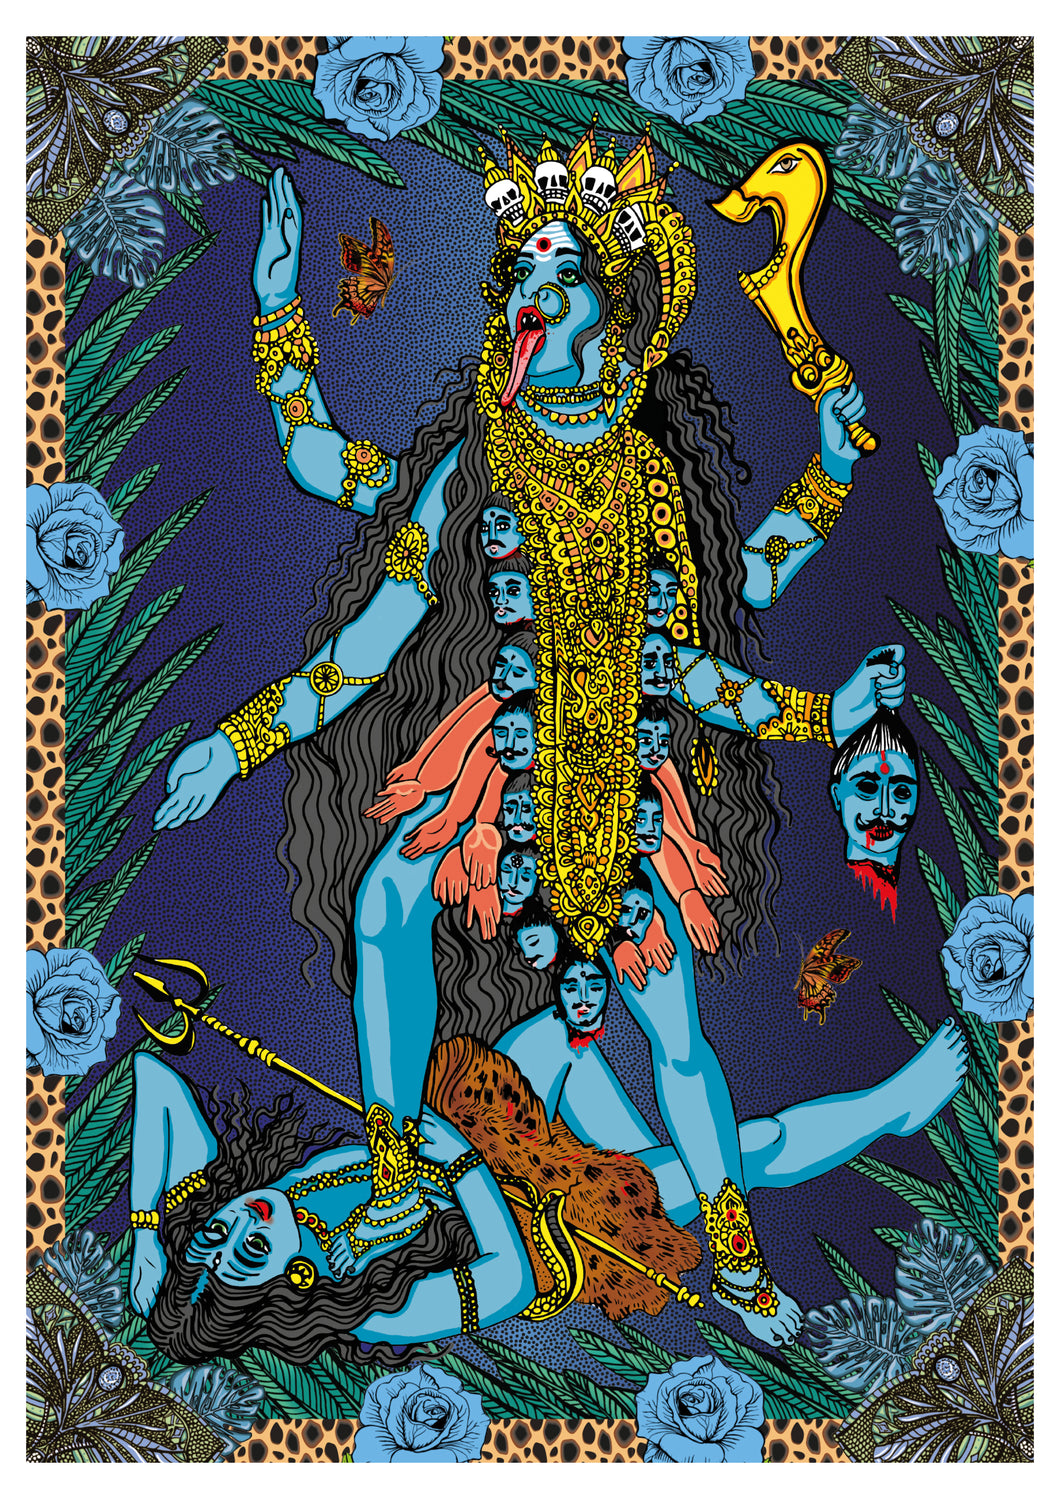 MsDre - Goddess Kali at Midnight -Framed A3 print